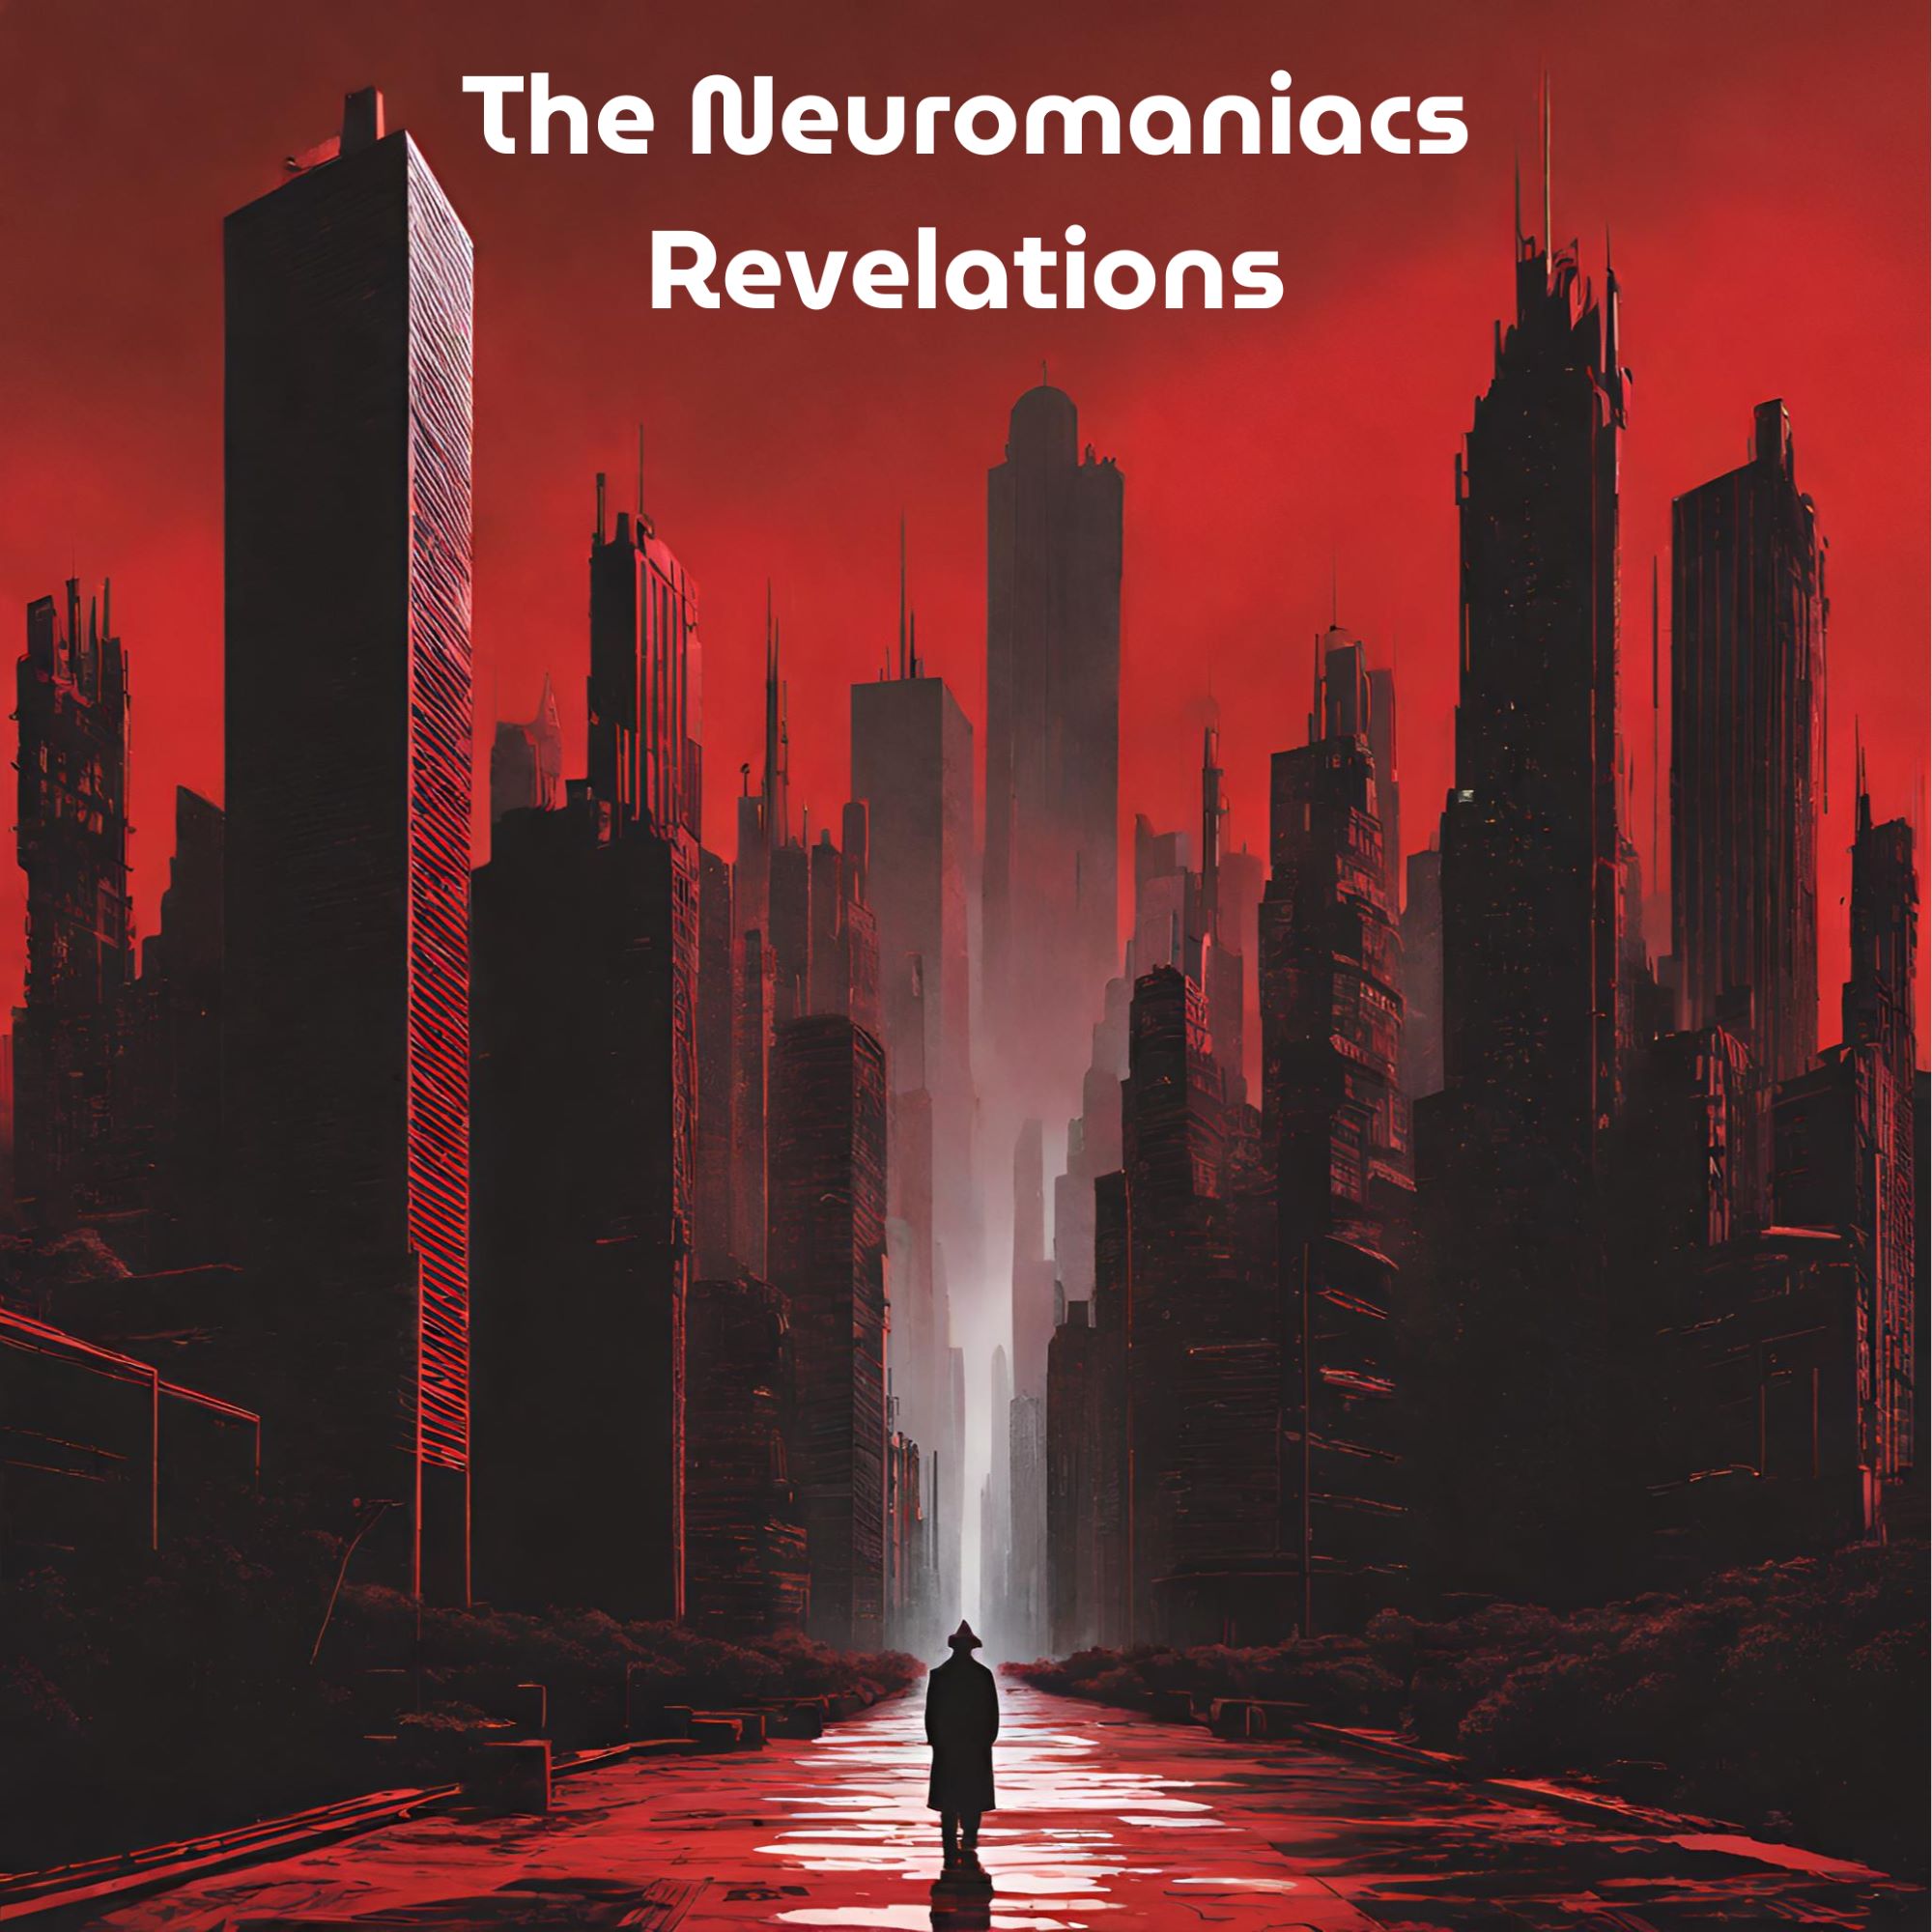 The Neuromaniacs – “Revelations”